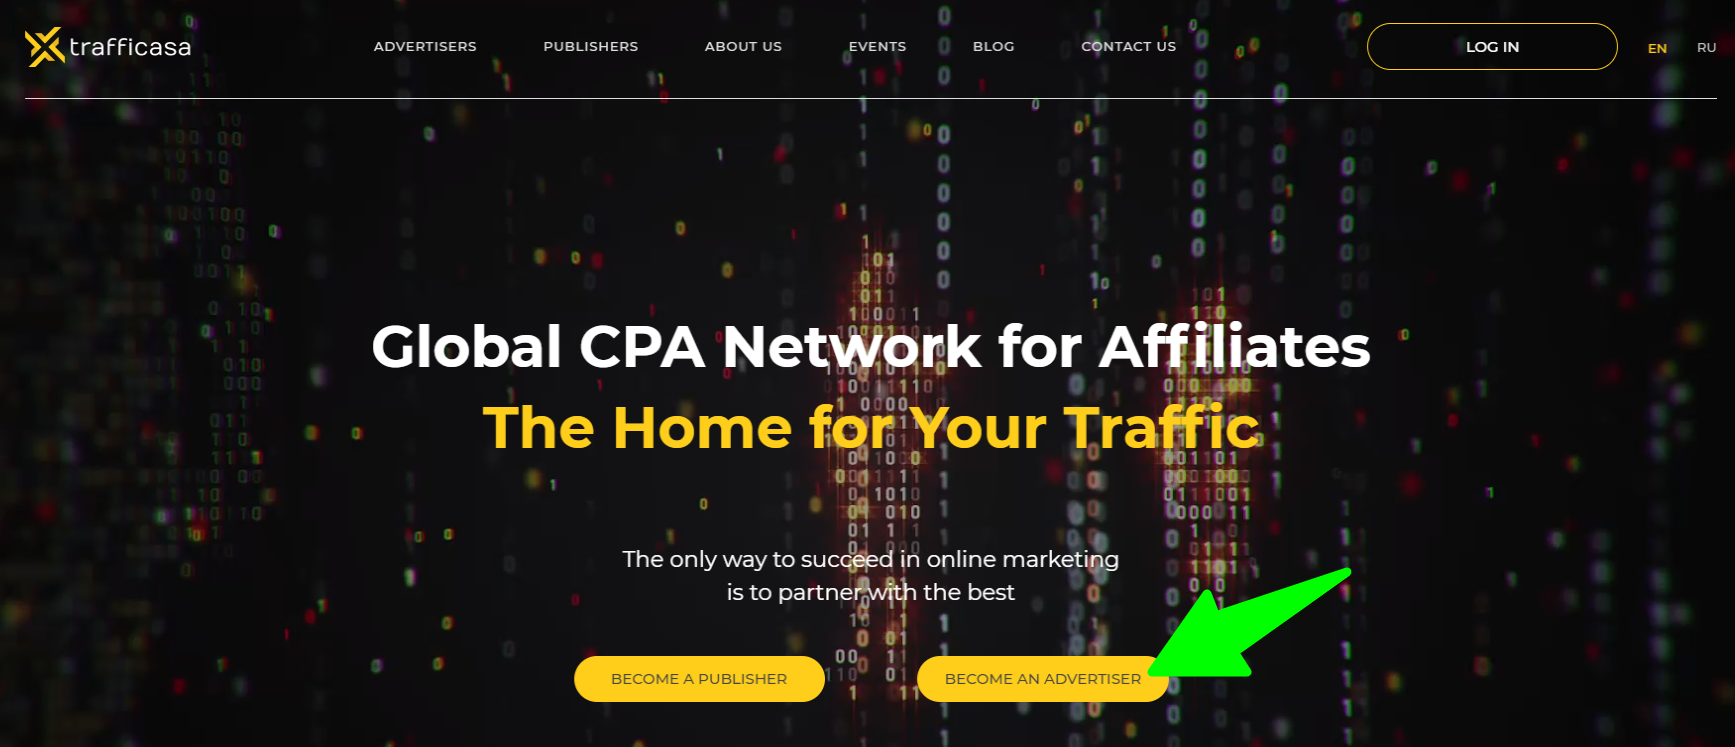 trafficasa - CPA Network